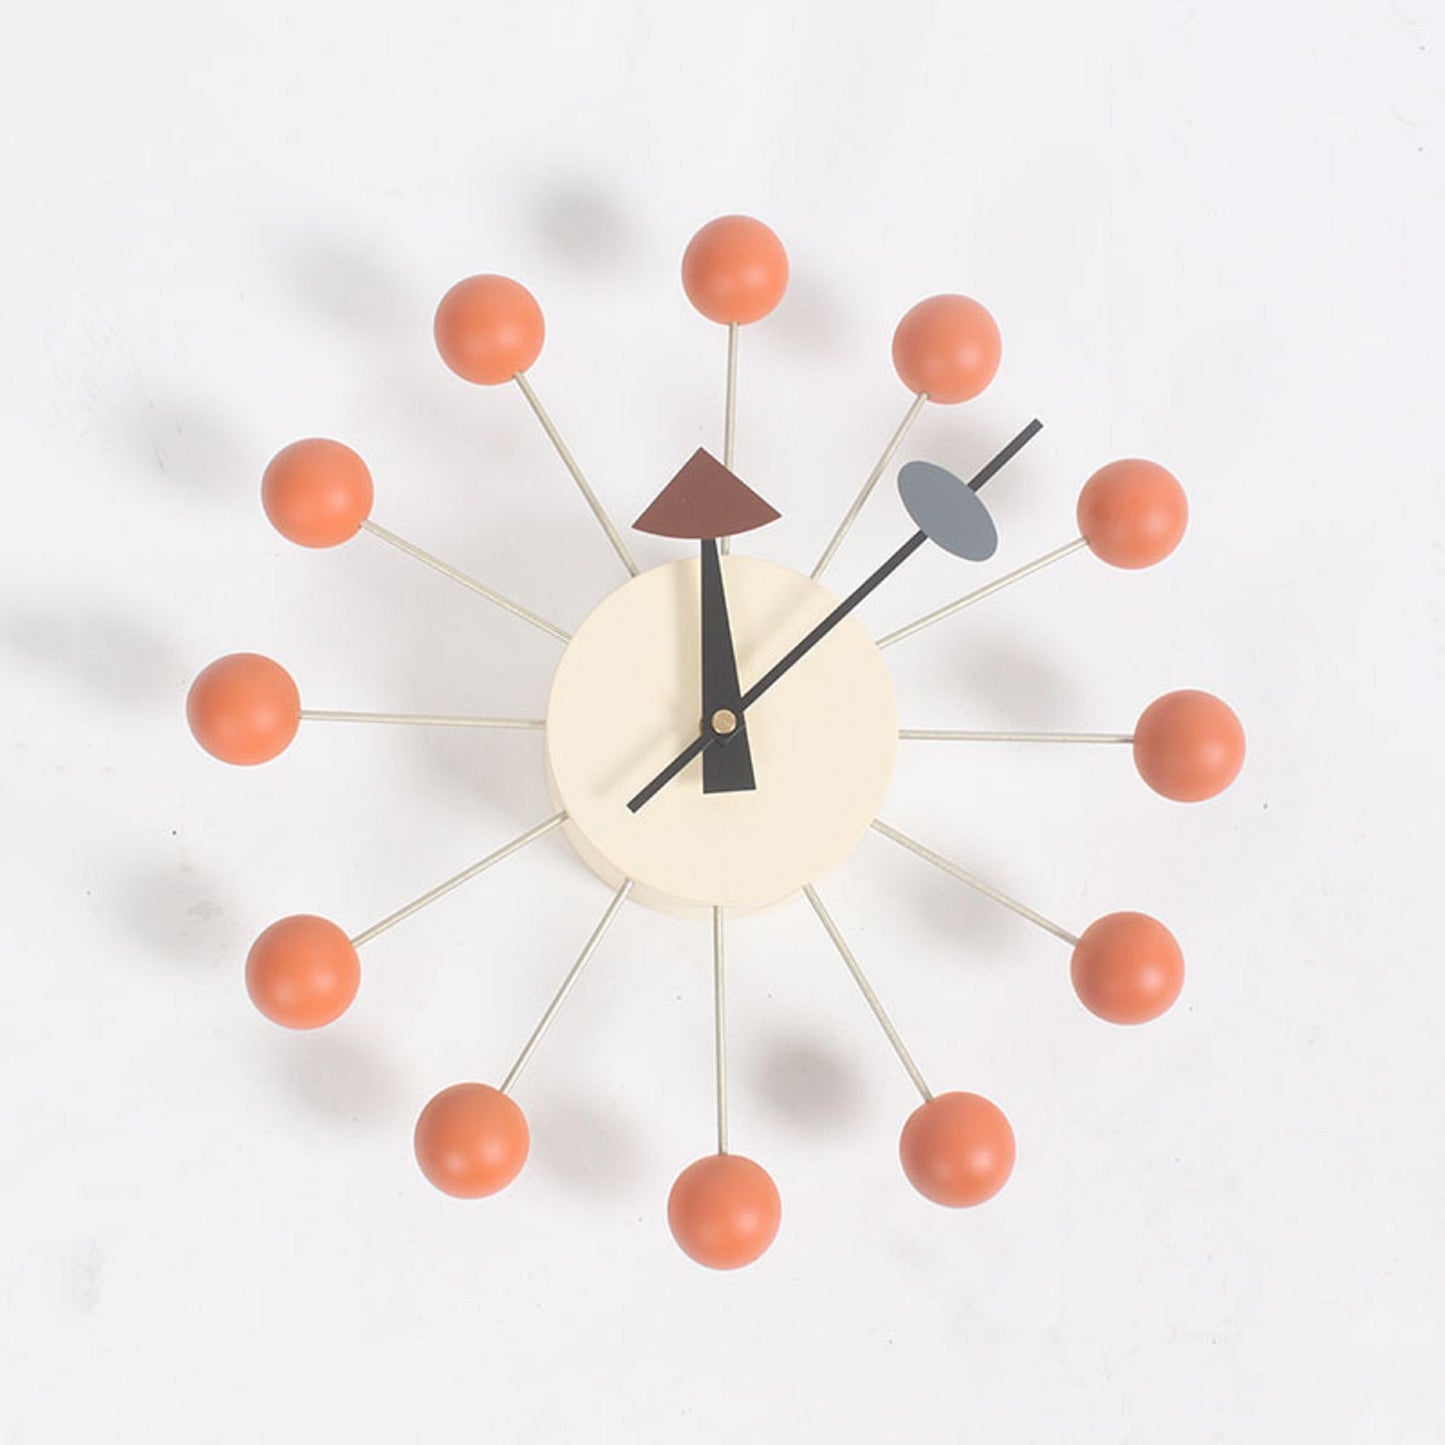 JIYUERLTD Wall clock,Candy Clock,Wood Wall Clock,Silent Clock for Homr decor